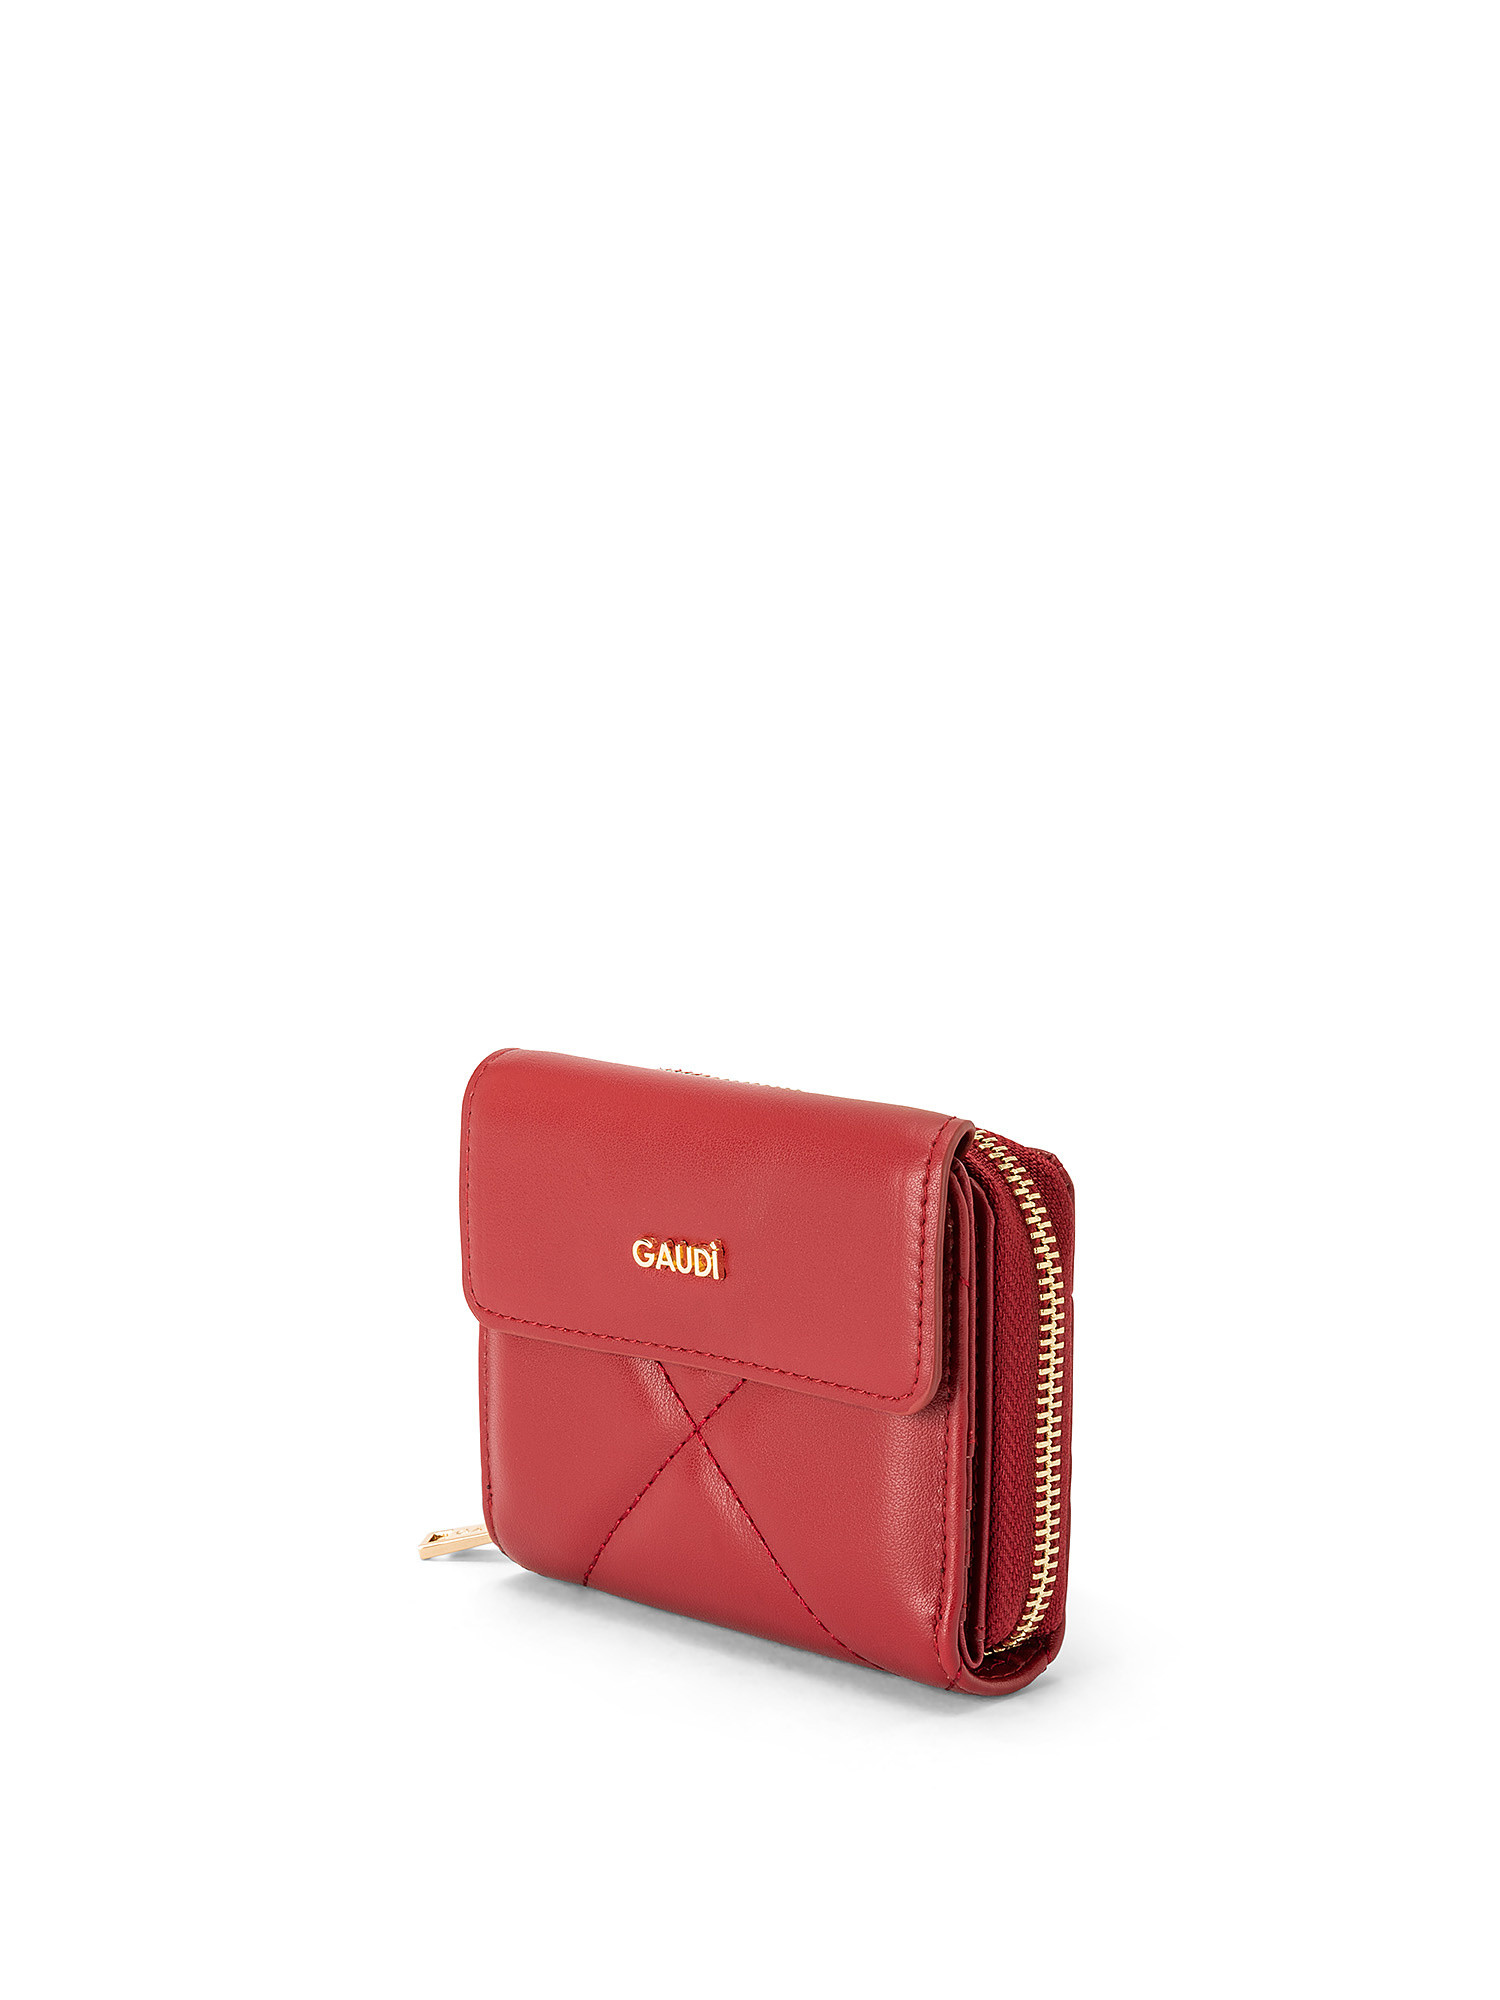 Gaudì - Luna small wallet, Dark Red, large image number 1